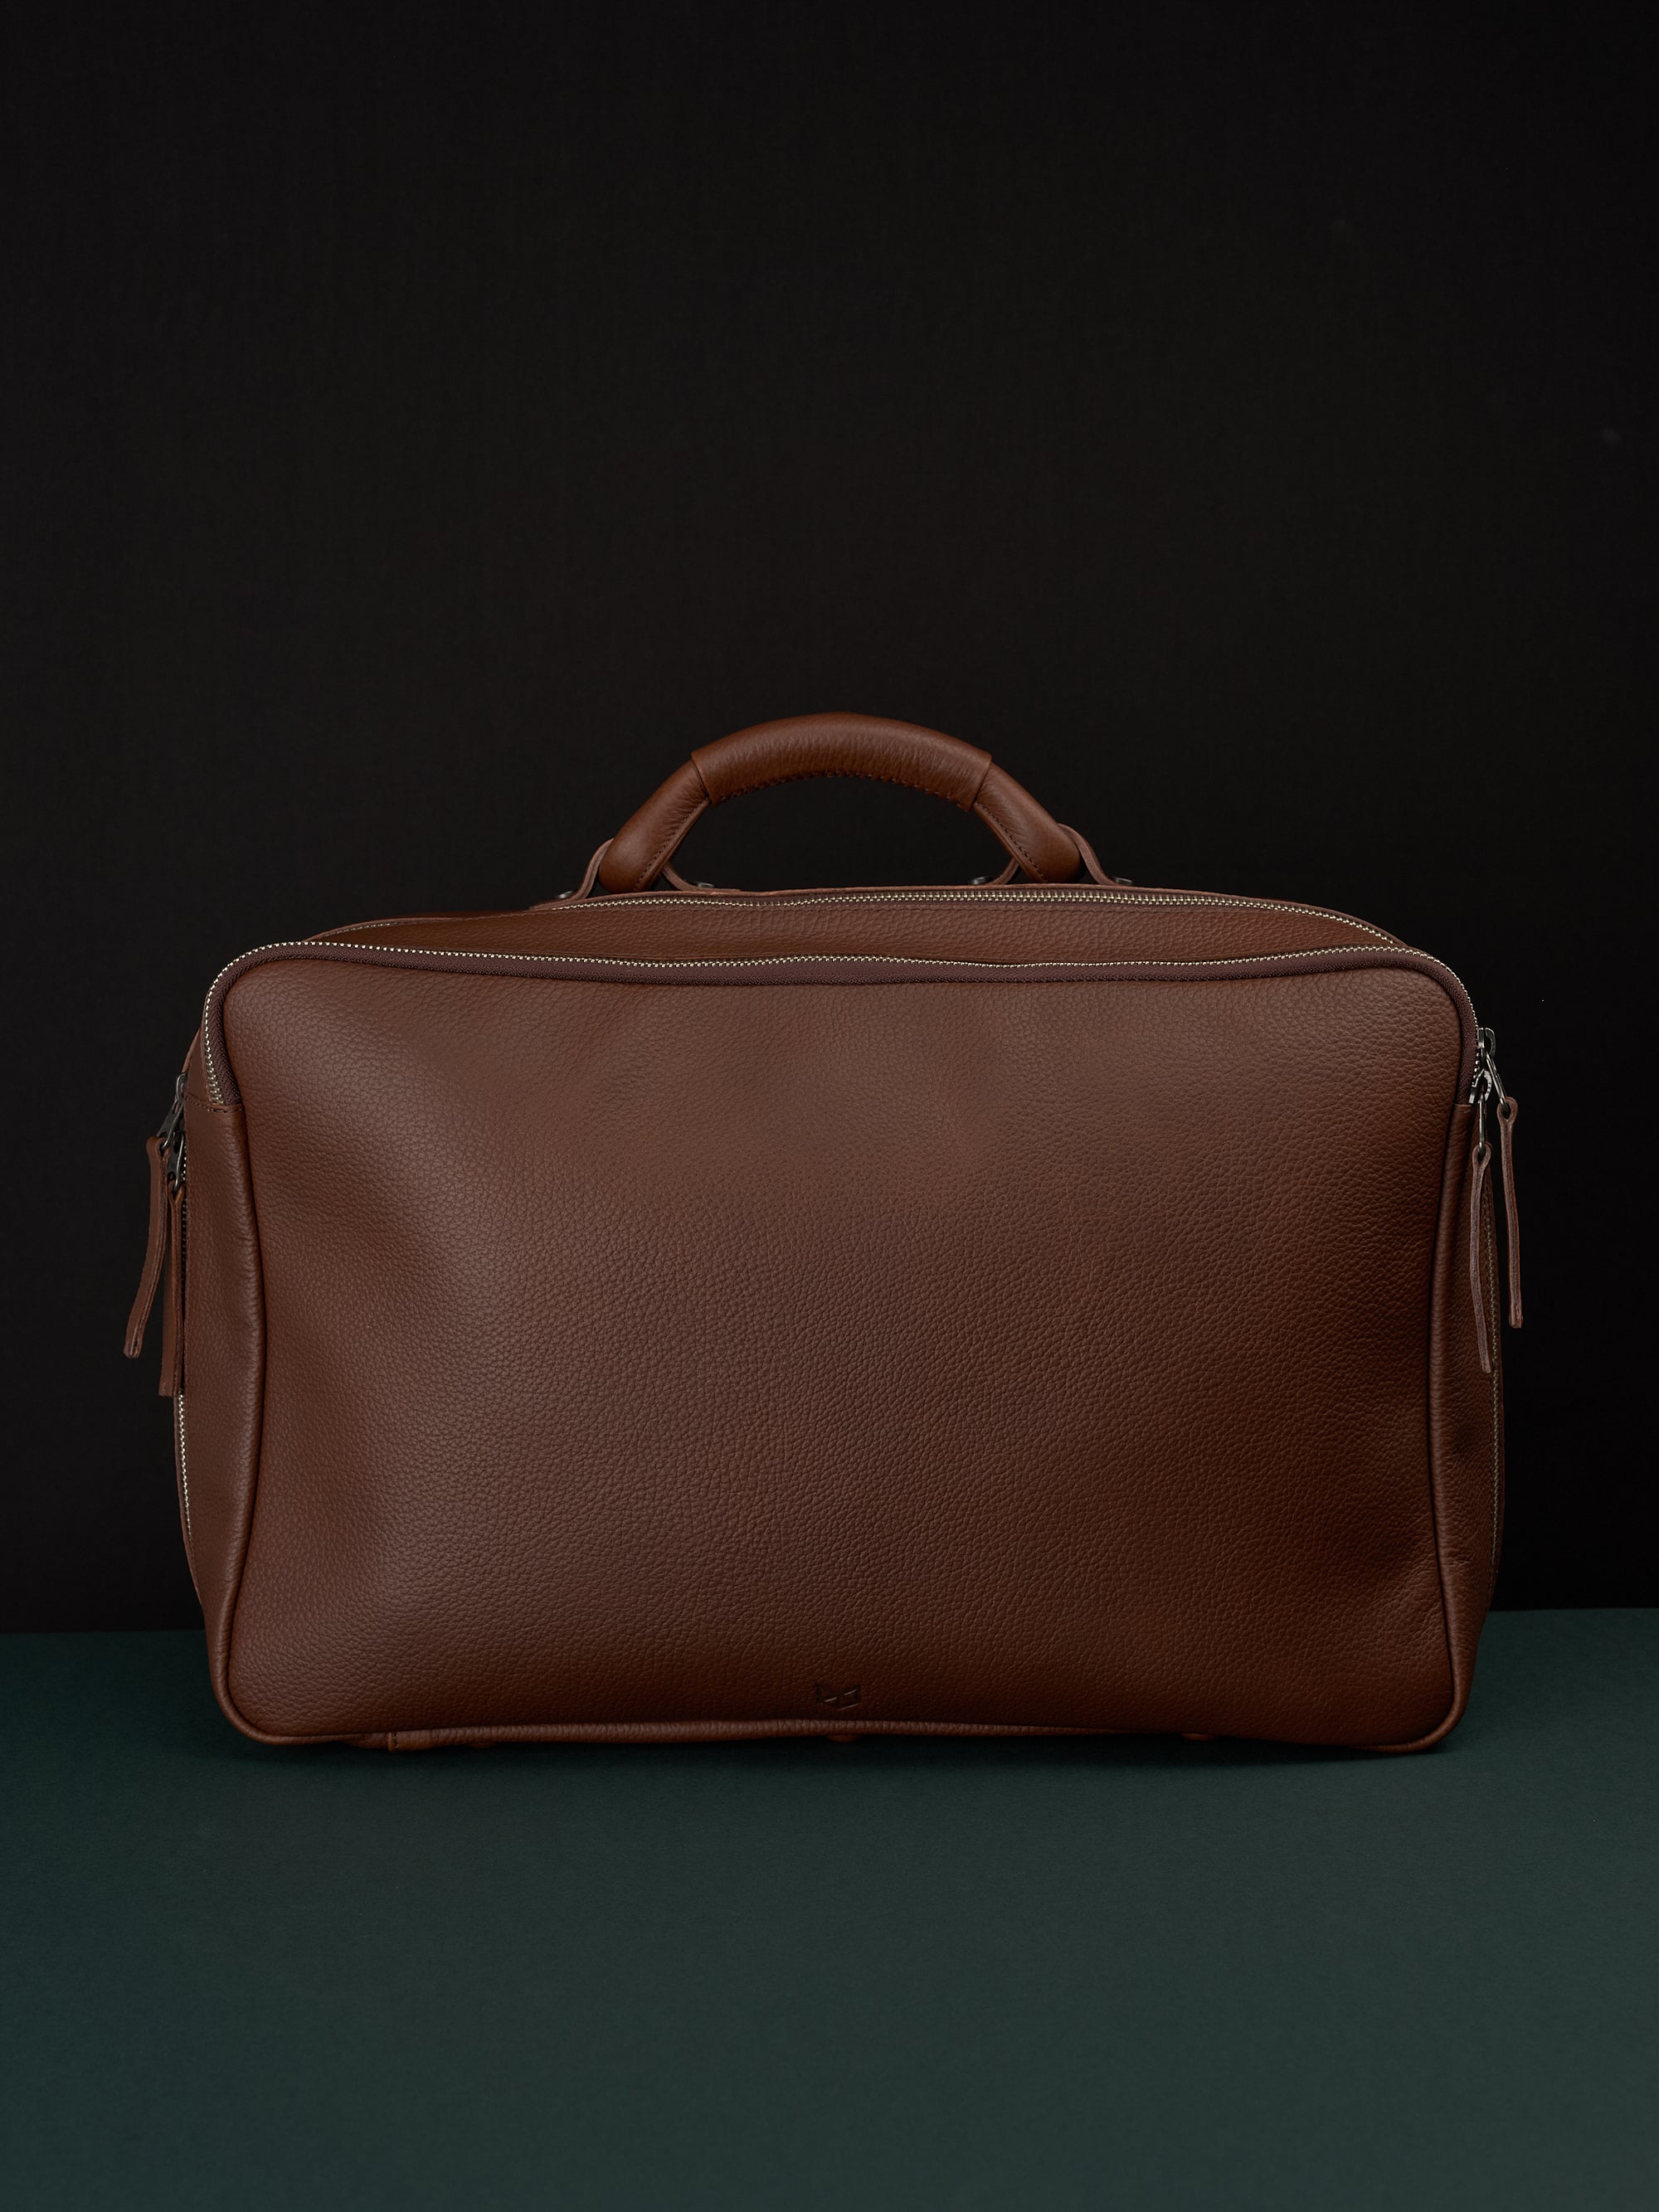 Weekend travel bag brown by Capra Leather